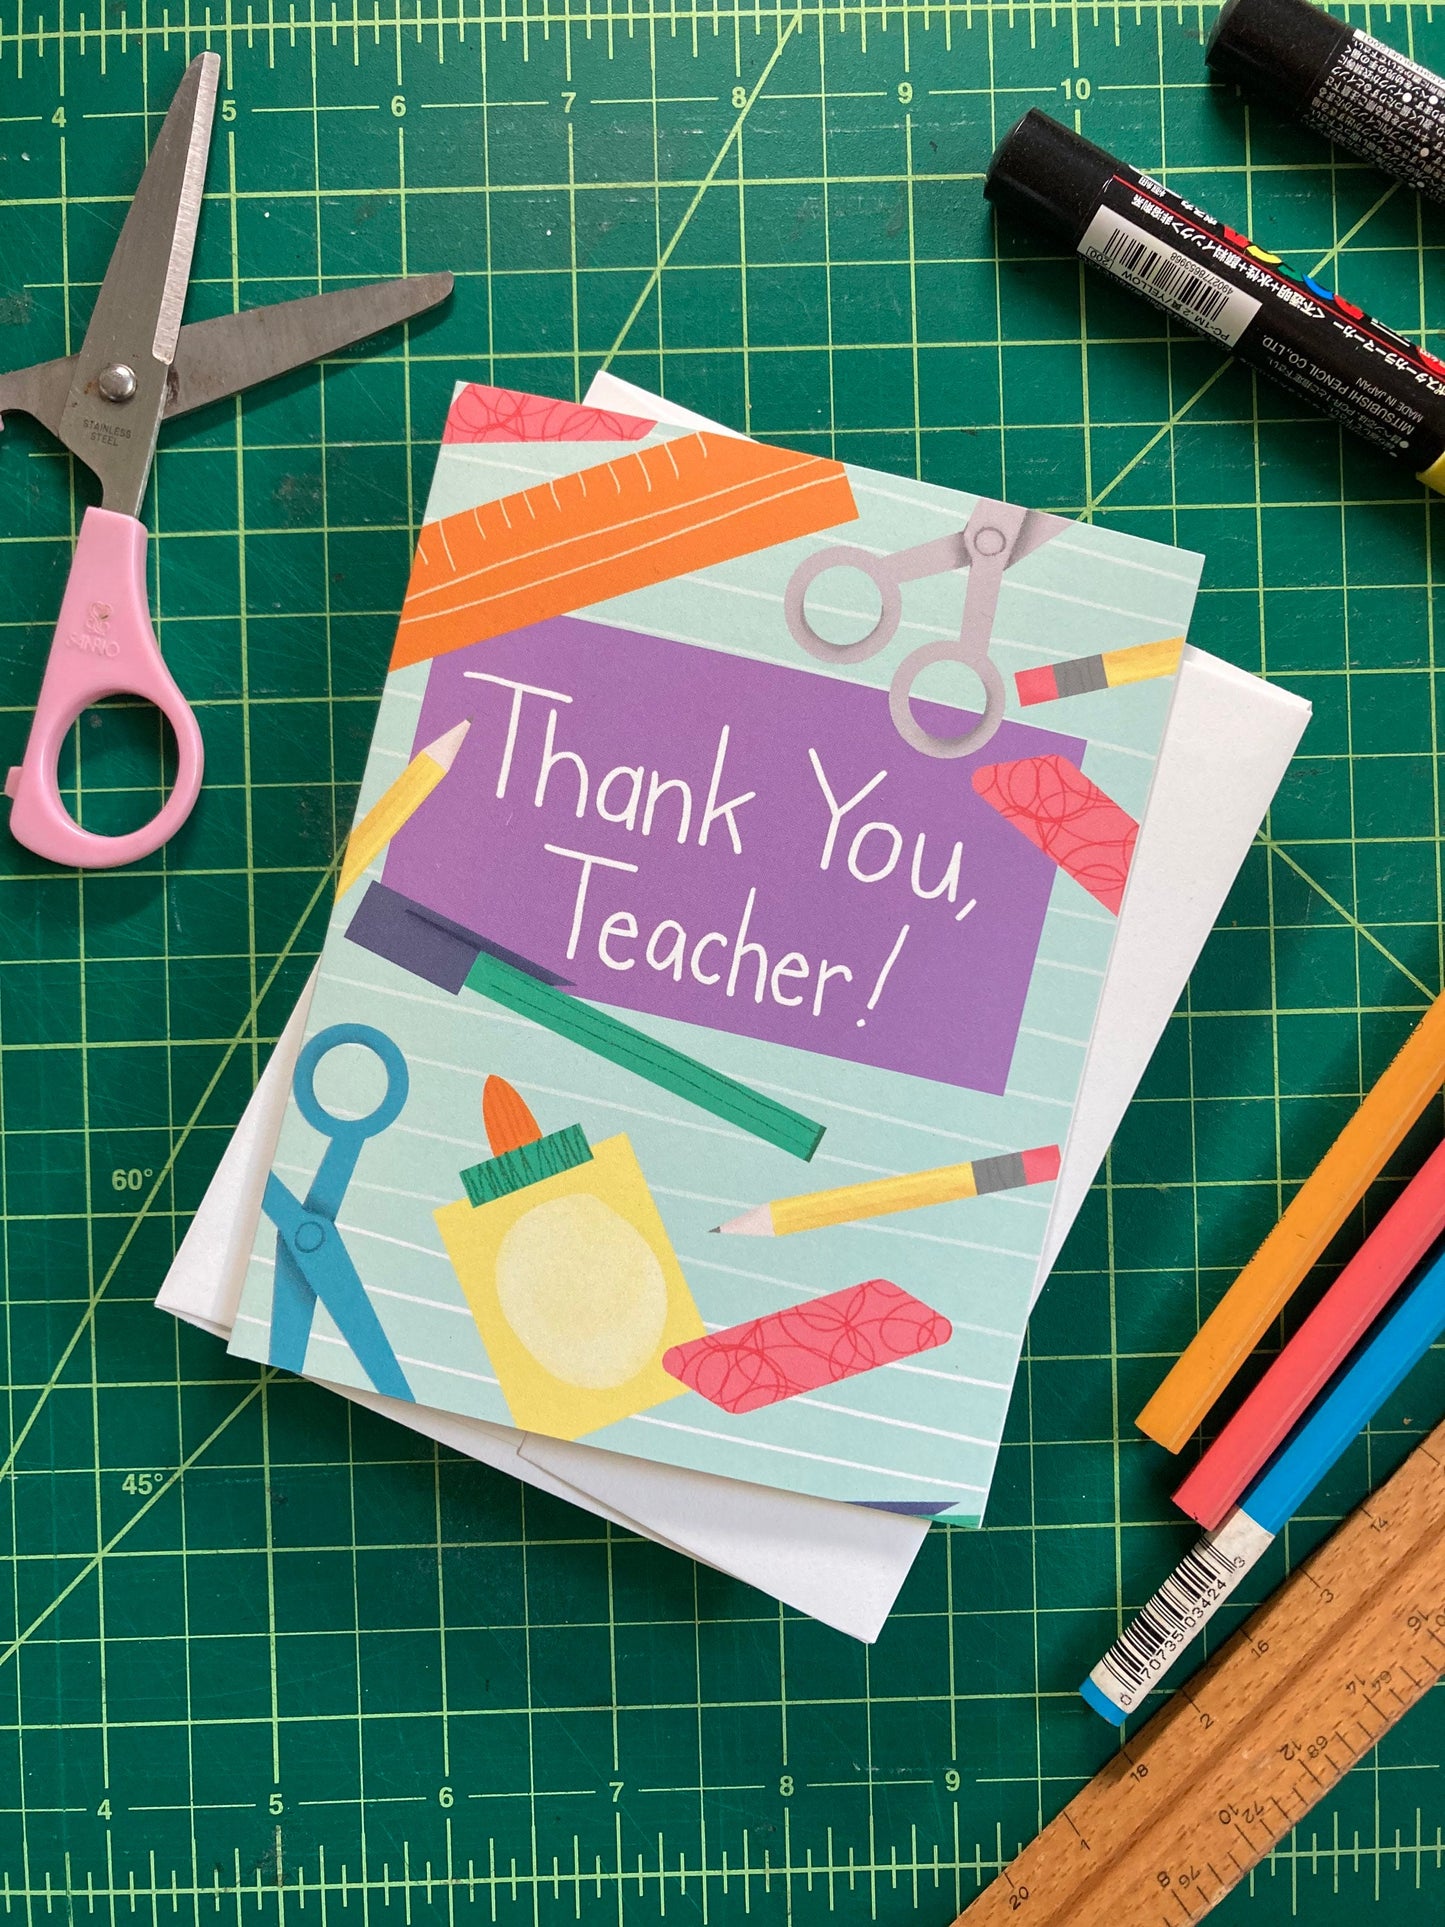 THANKS - Thanks Teacher School Supplies - Appreciation, educator, professor, special education, art by Adriana Bergstrom (Adriprints)